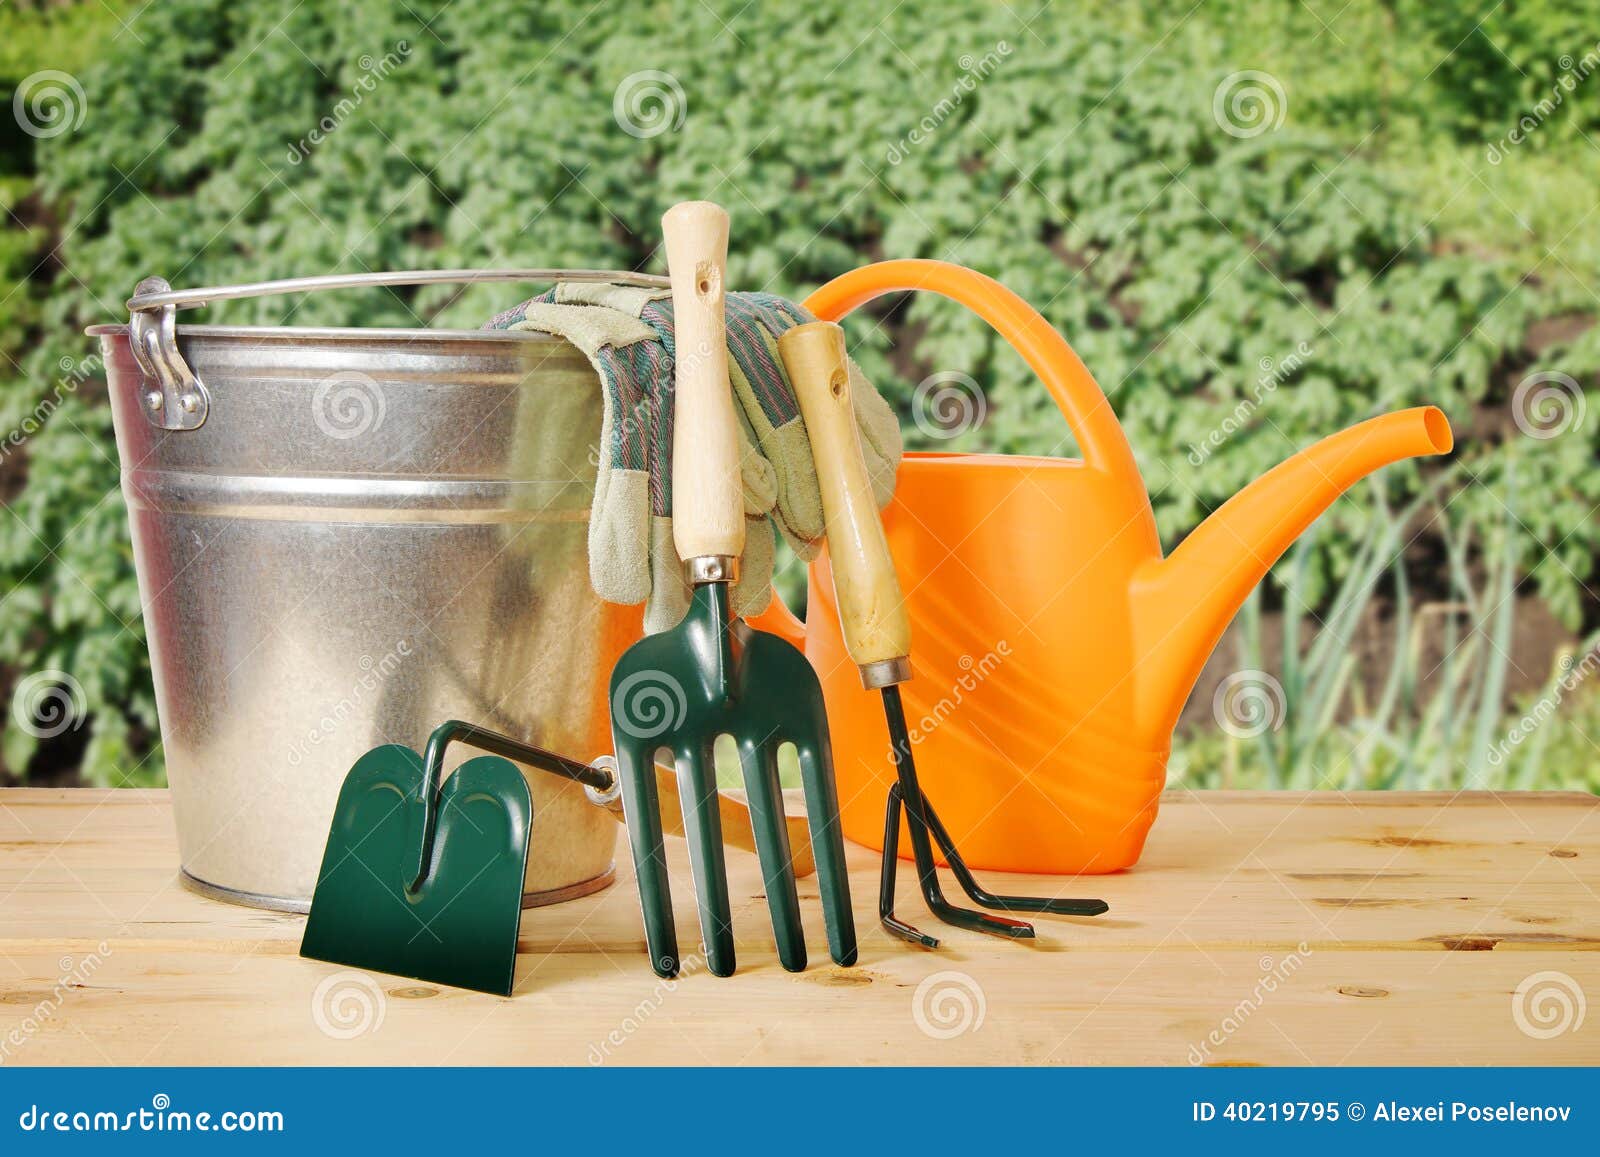 Gardening still life with various tools against green plantation